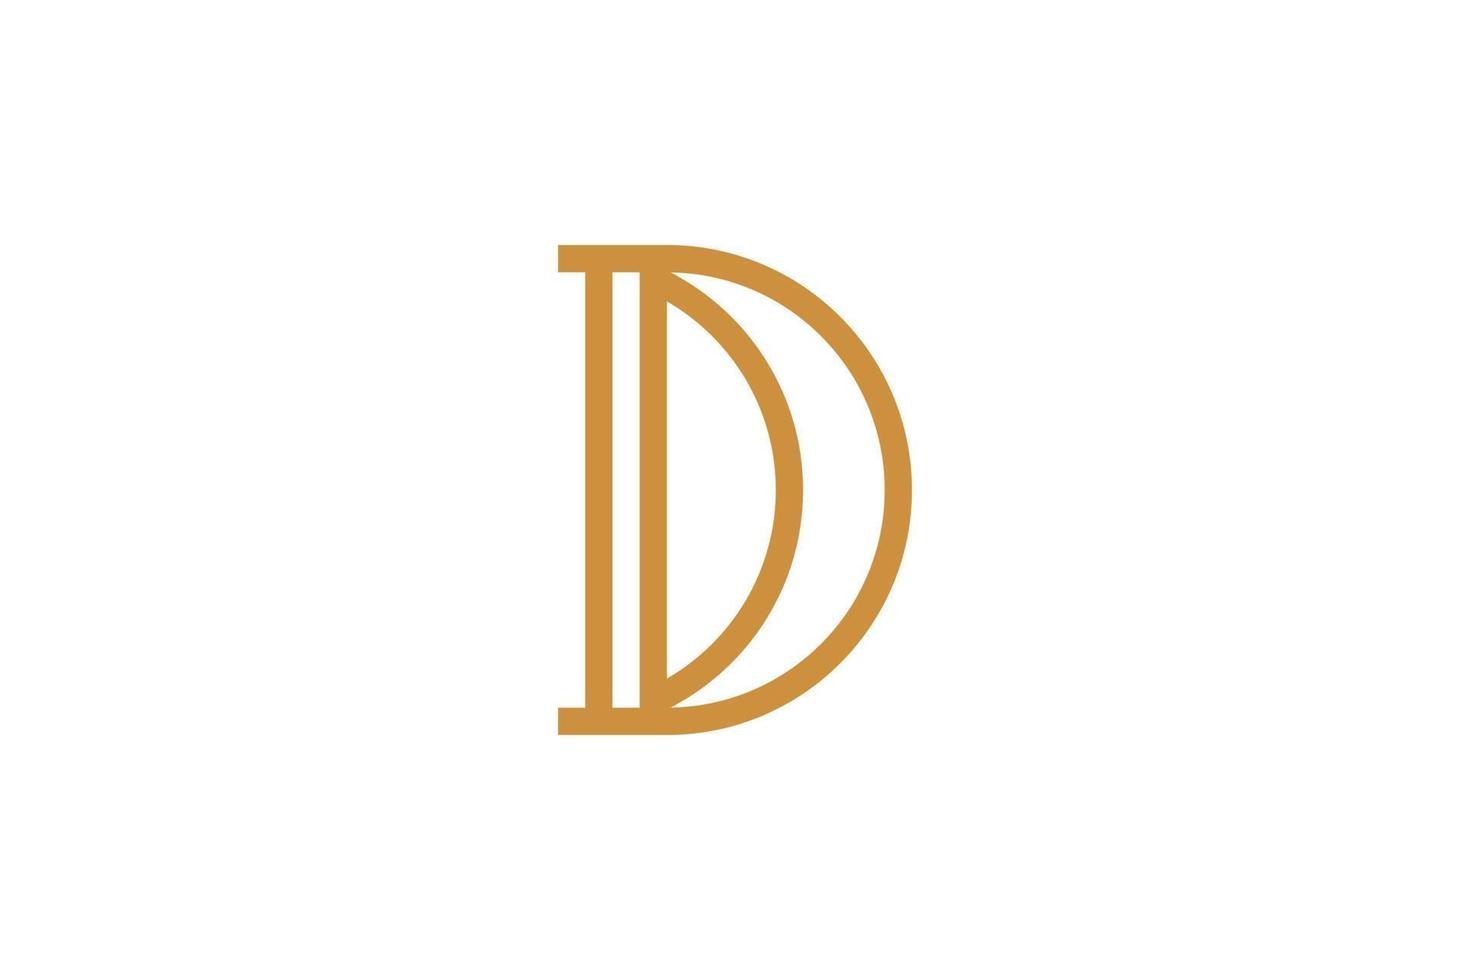 monoline-buchstabe d-logo-vorlage vektor